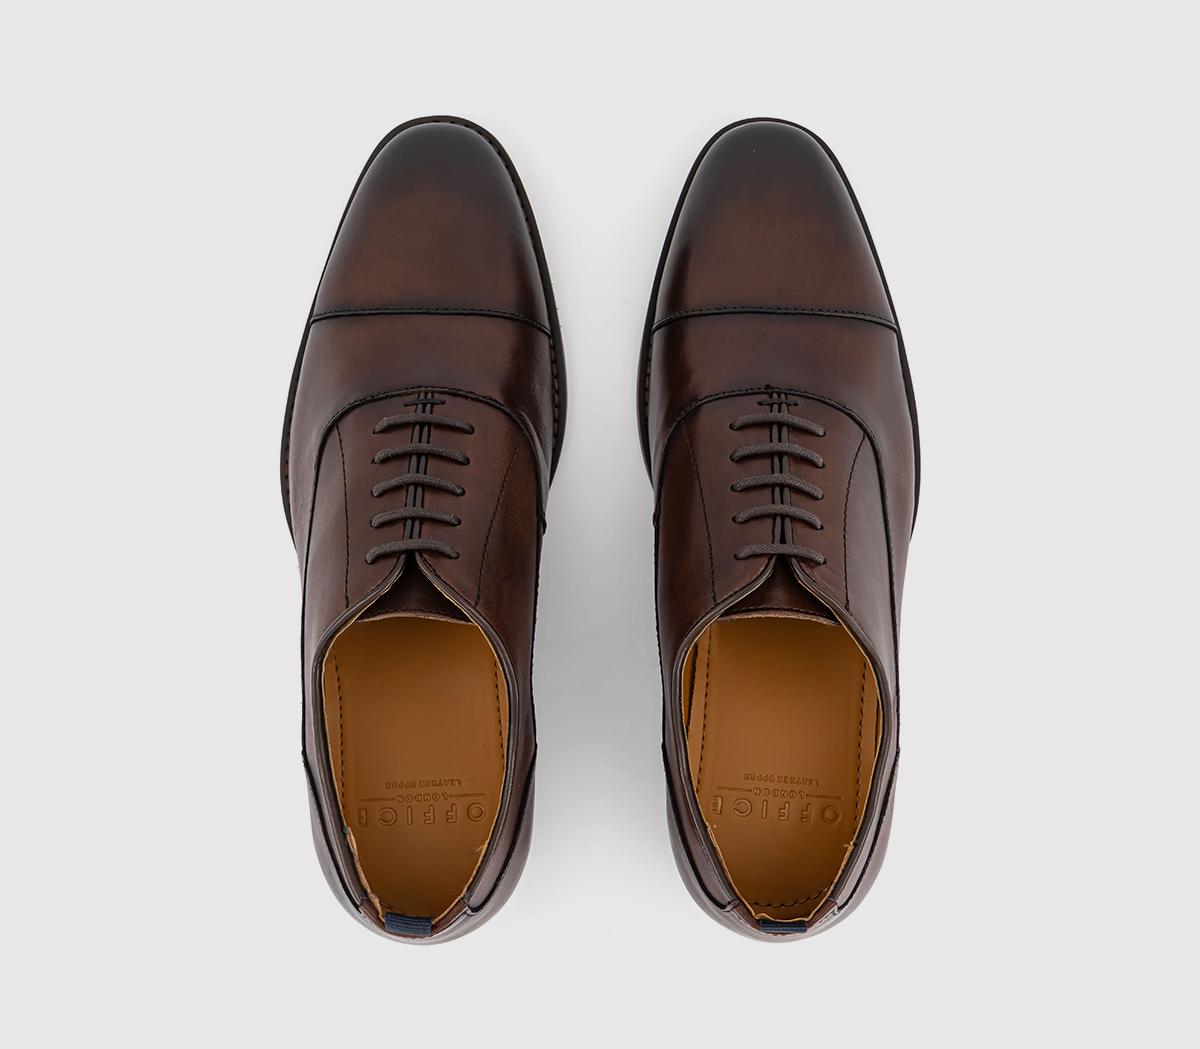 OFFICE Montana Toecap Oxford Shoes Brown Leather - Men’s Smart Shoes